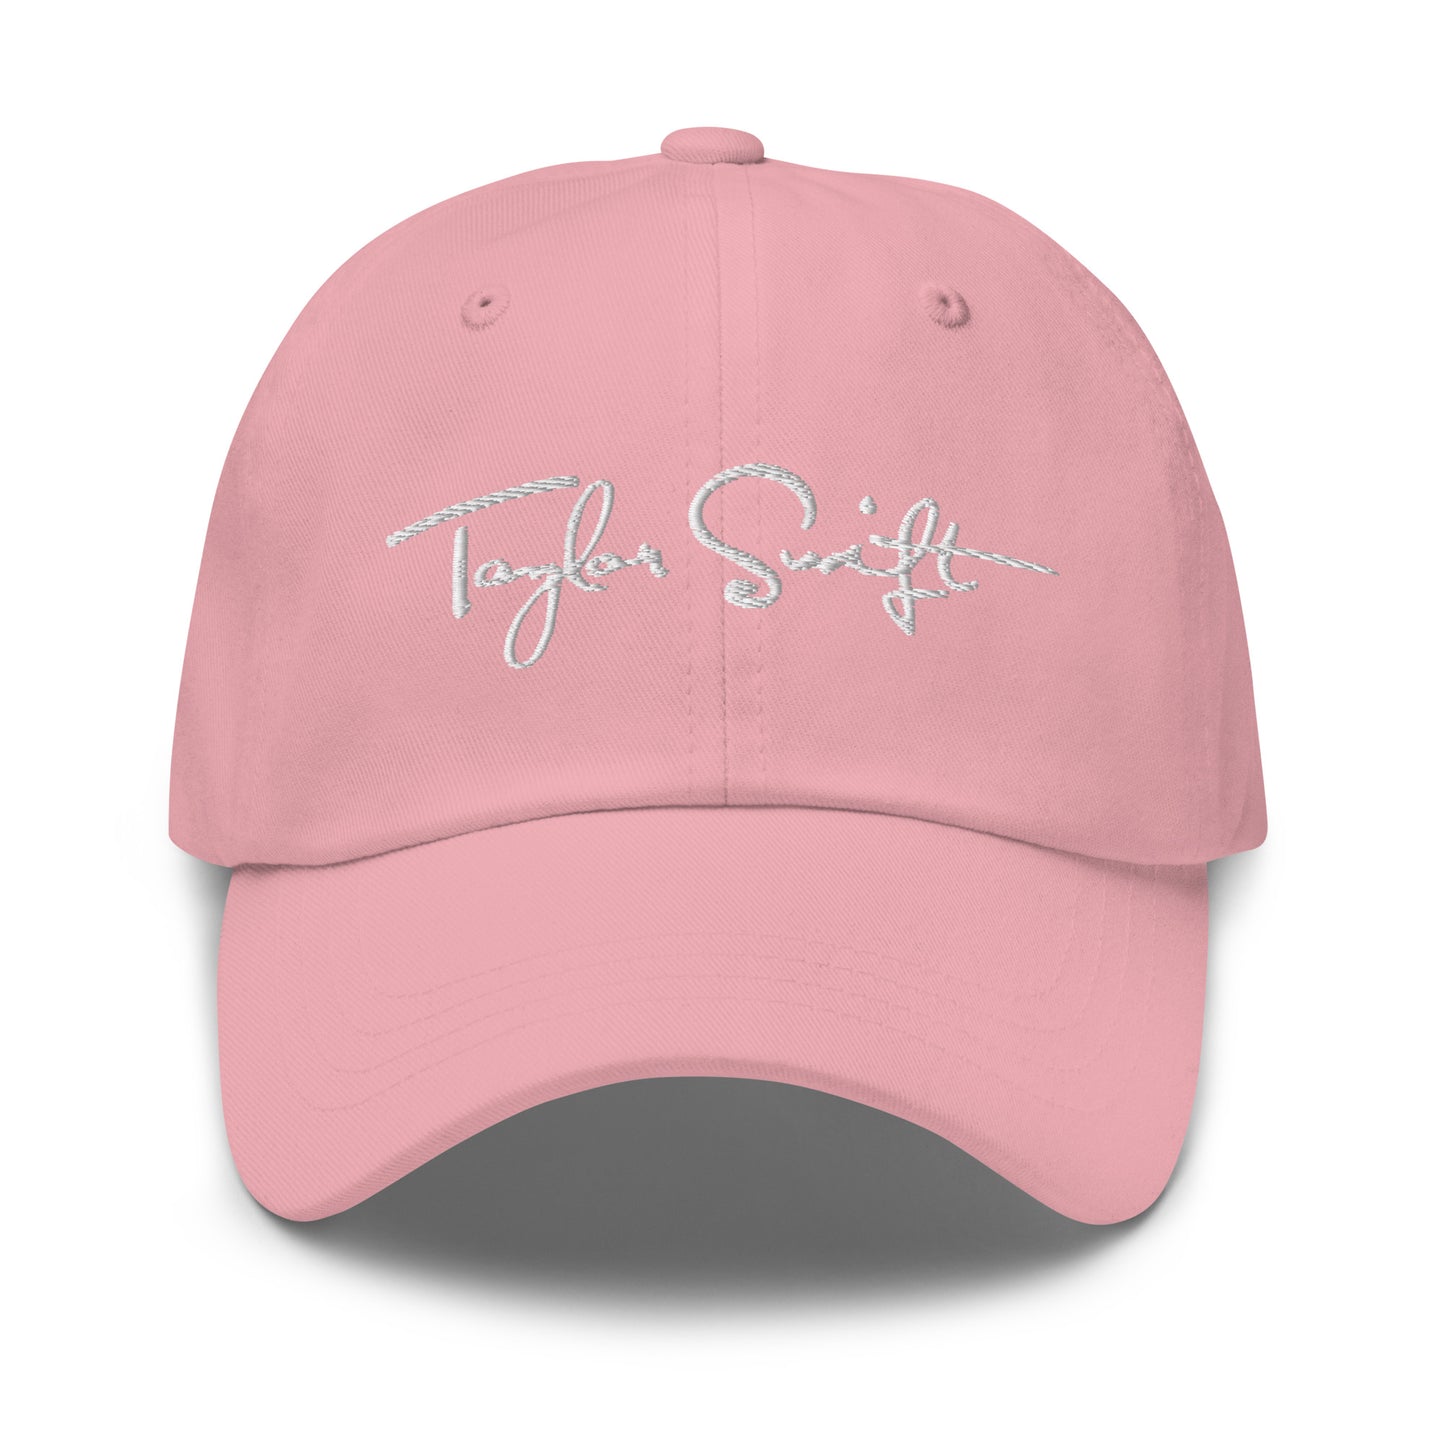 Taylor Swift Signature Dad / Baseball caps